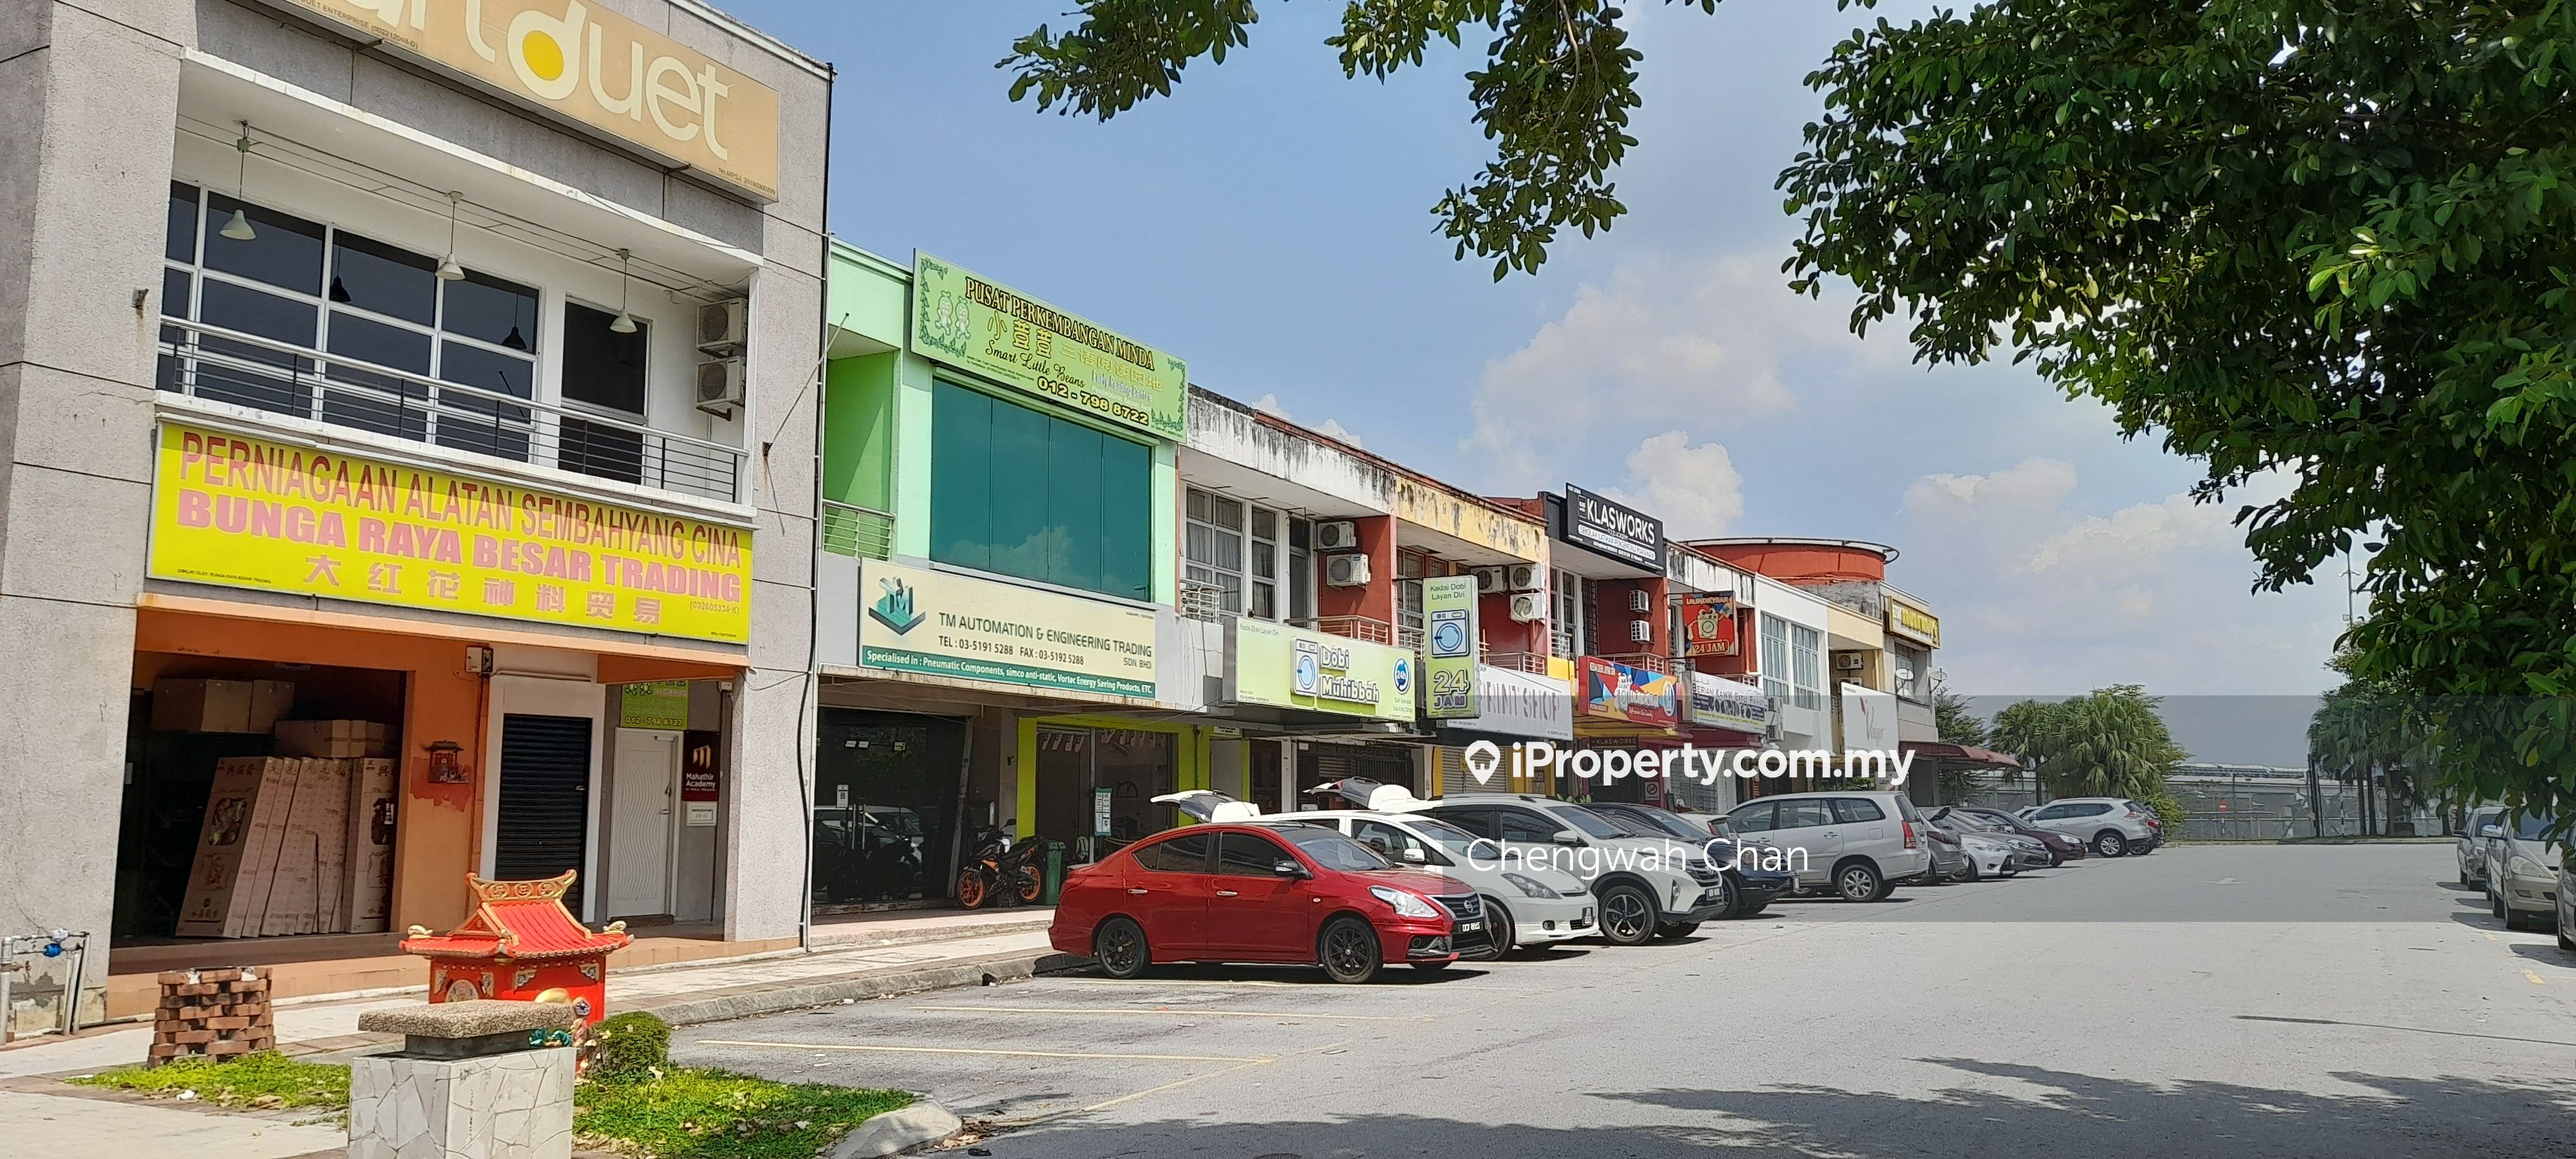 Putra Point Commercial Center, Subang Jaya, Putra Heights, Putra Heights